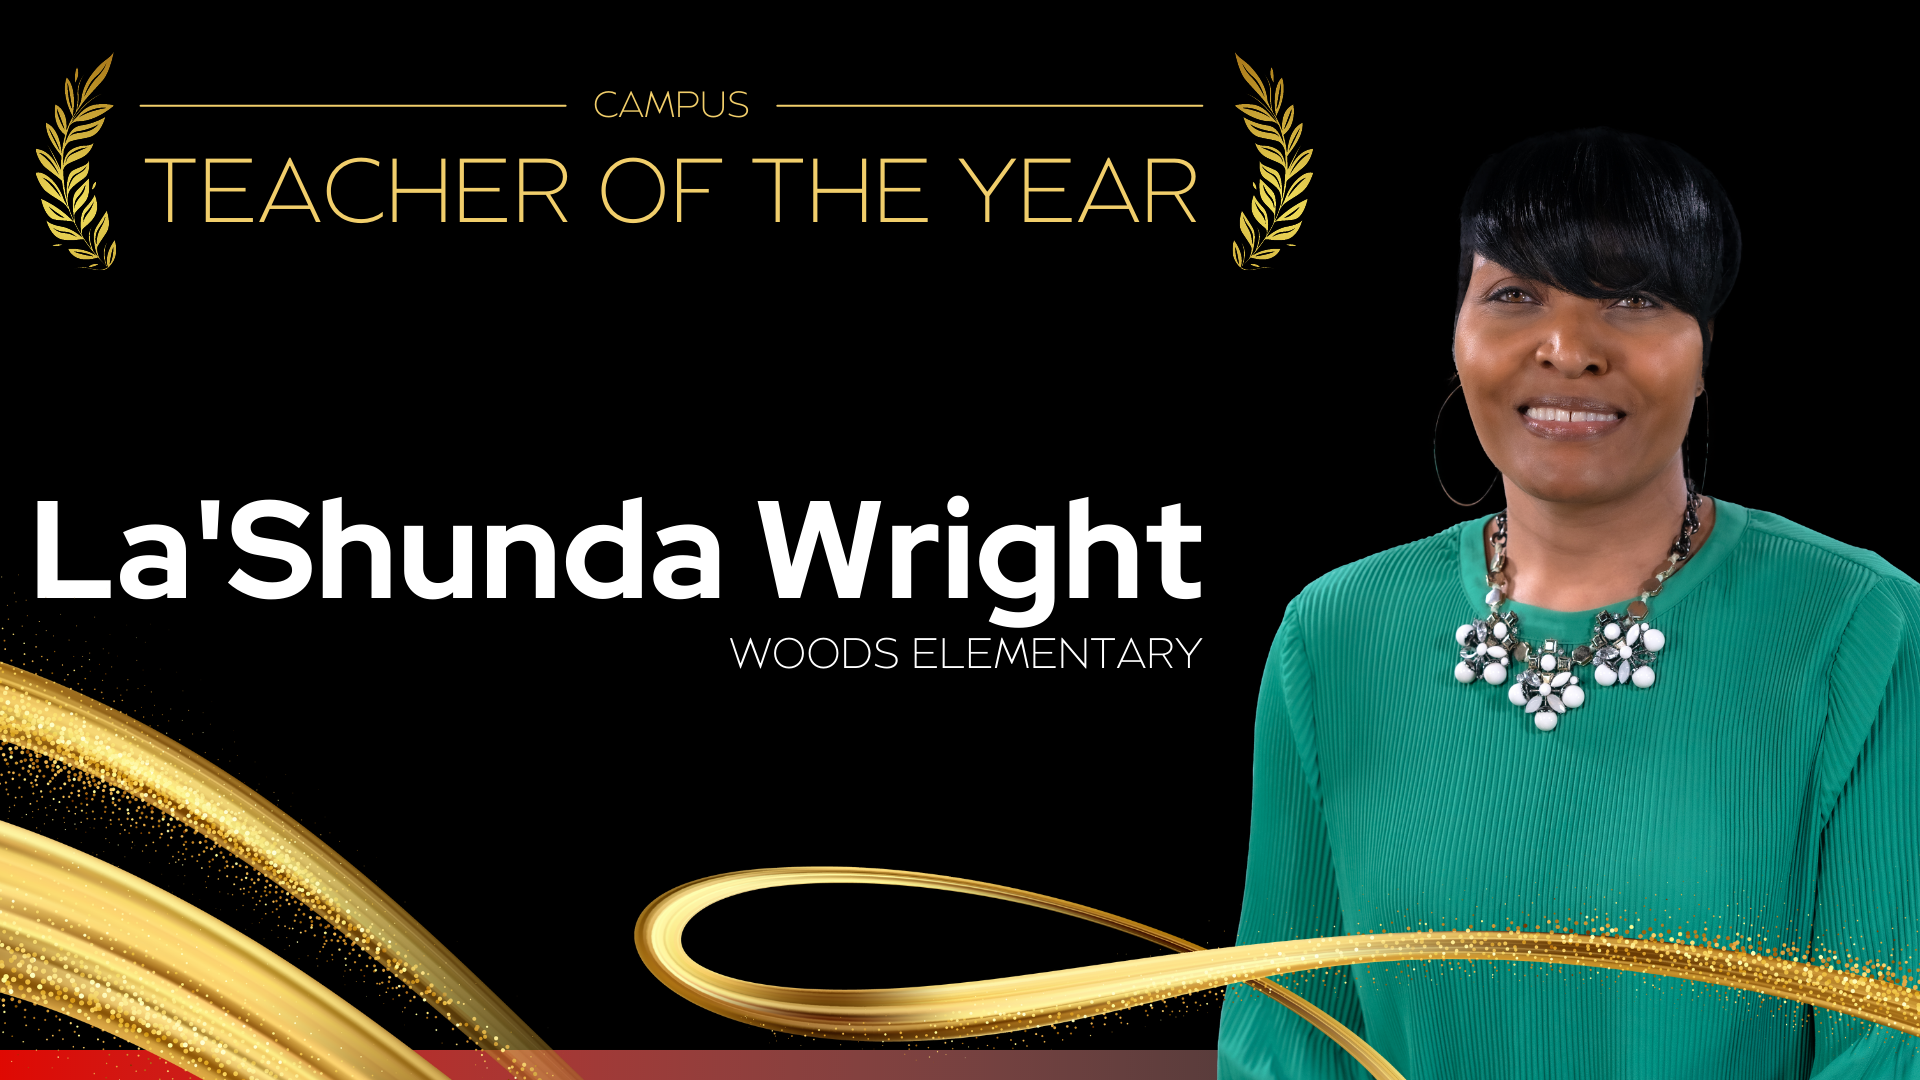 Campus Teacher of the Year Andy Woods Elementary School - La'Shunda Wright    